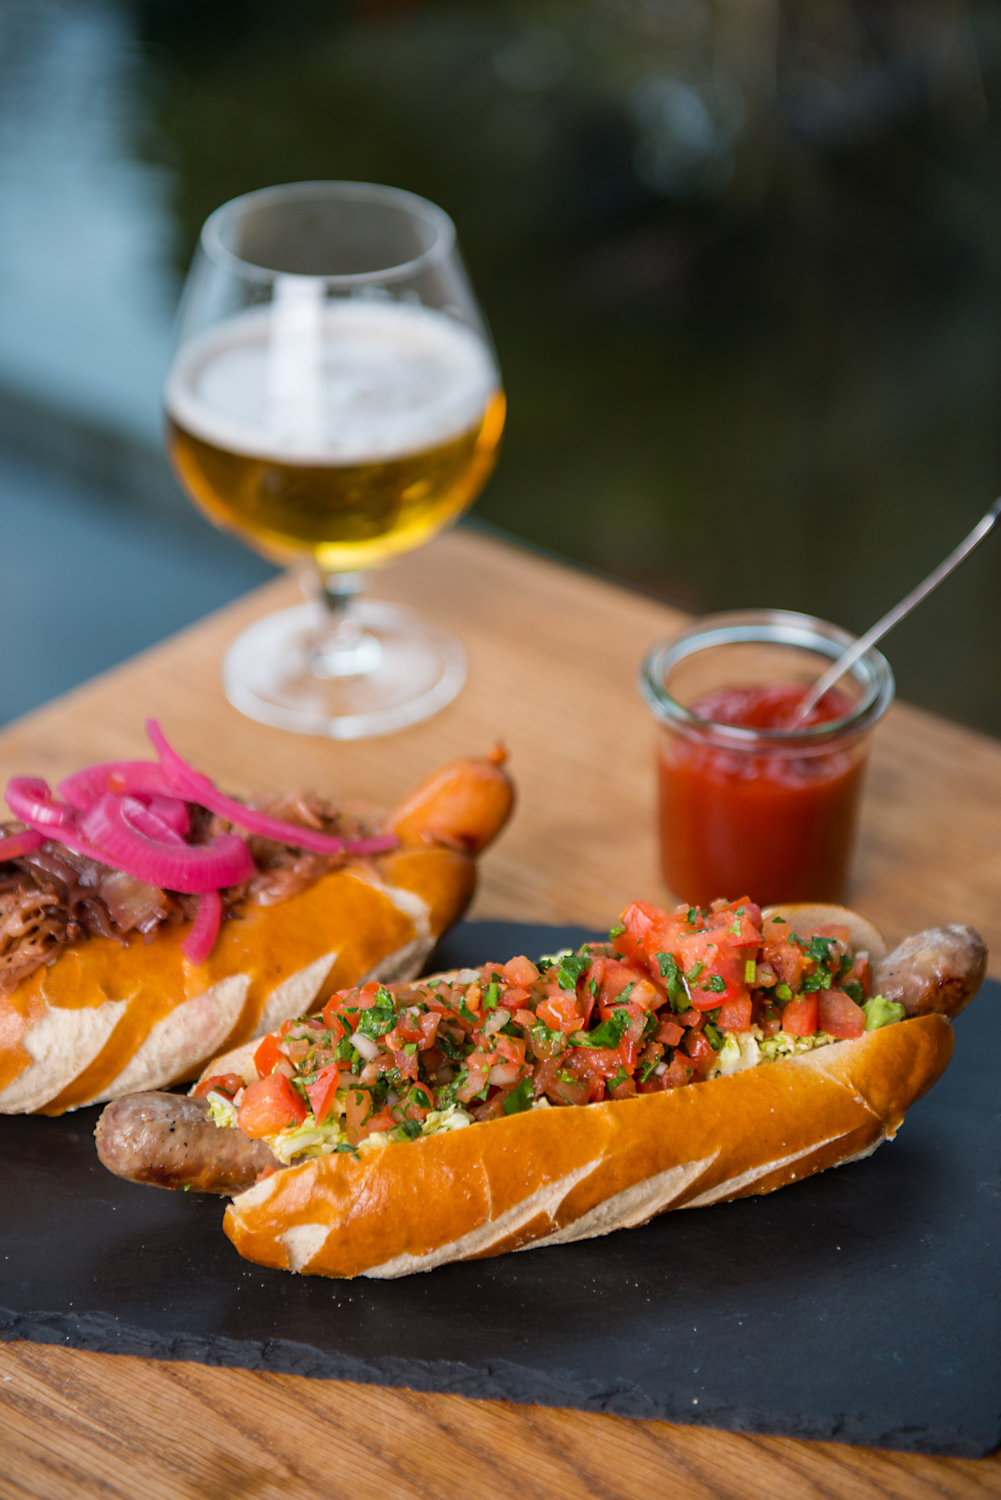 Food styling and food photography hotdog